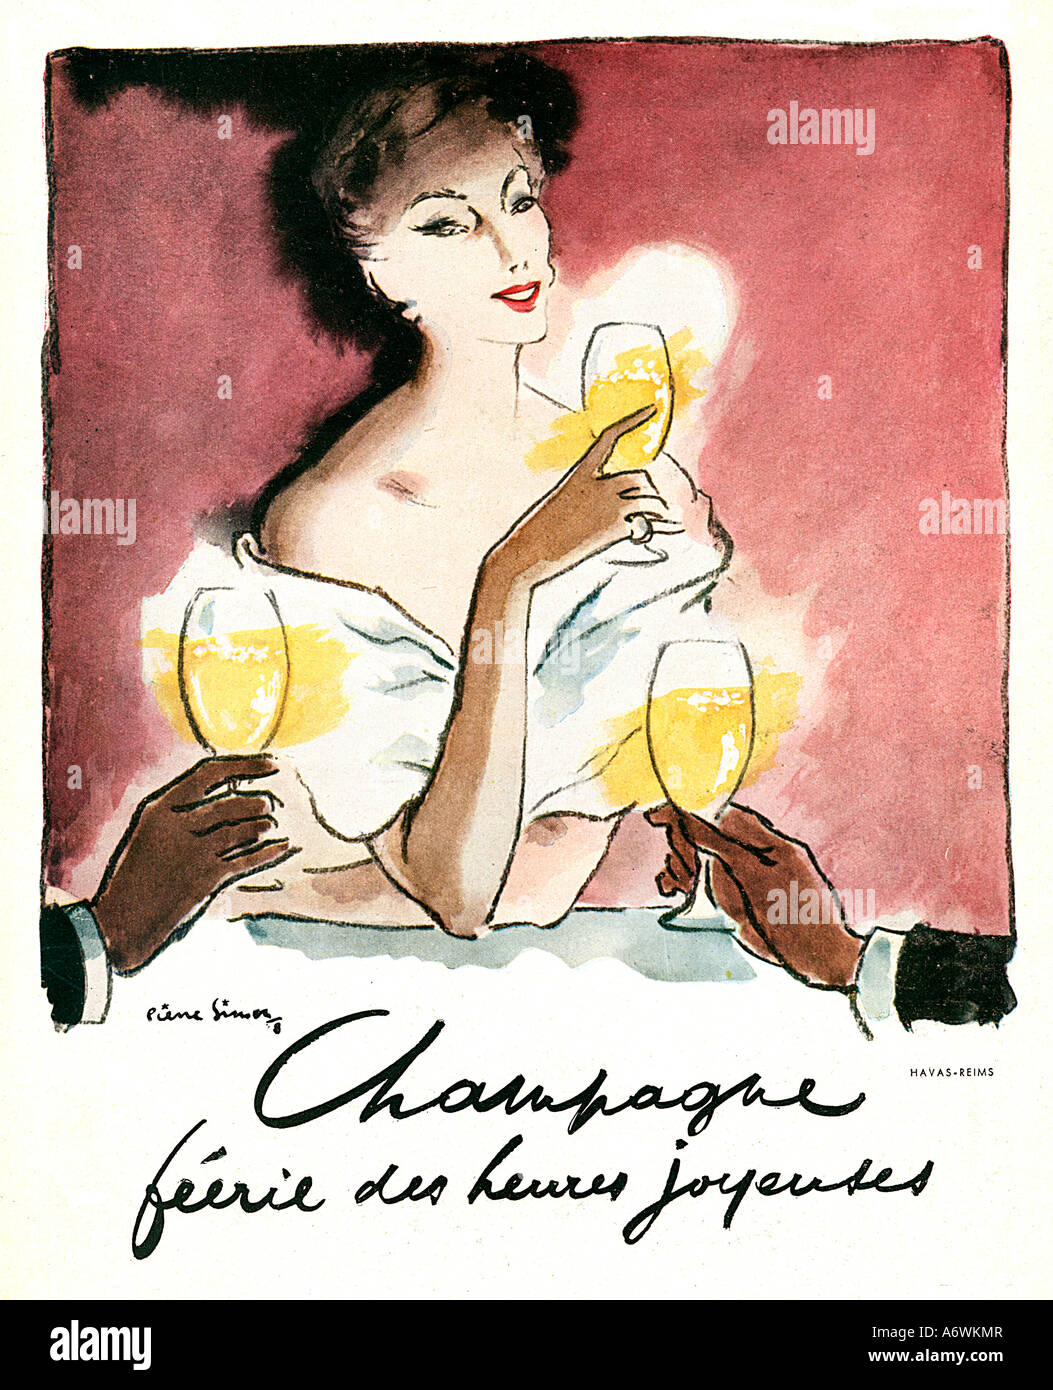 Champagne Feerie Heures Joyeuses elegante 1940s annuncio francese una terra incantata di ore felici infatti Foto Stock